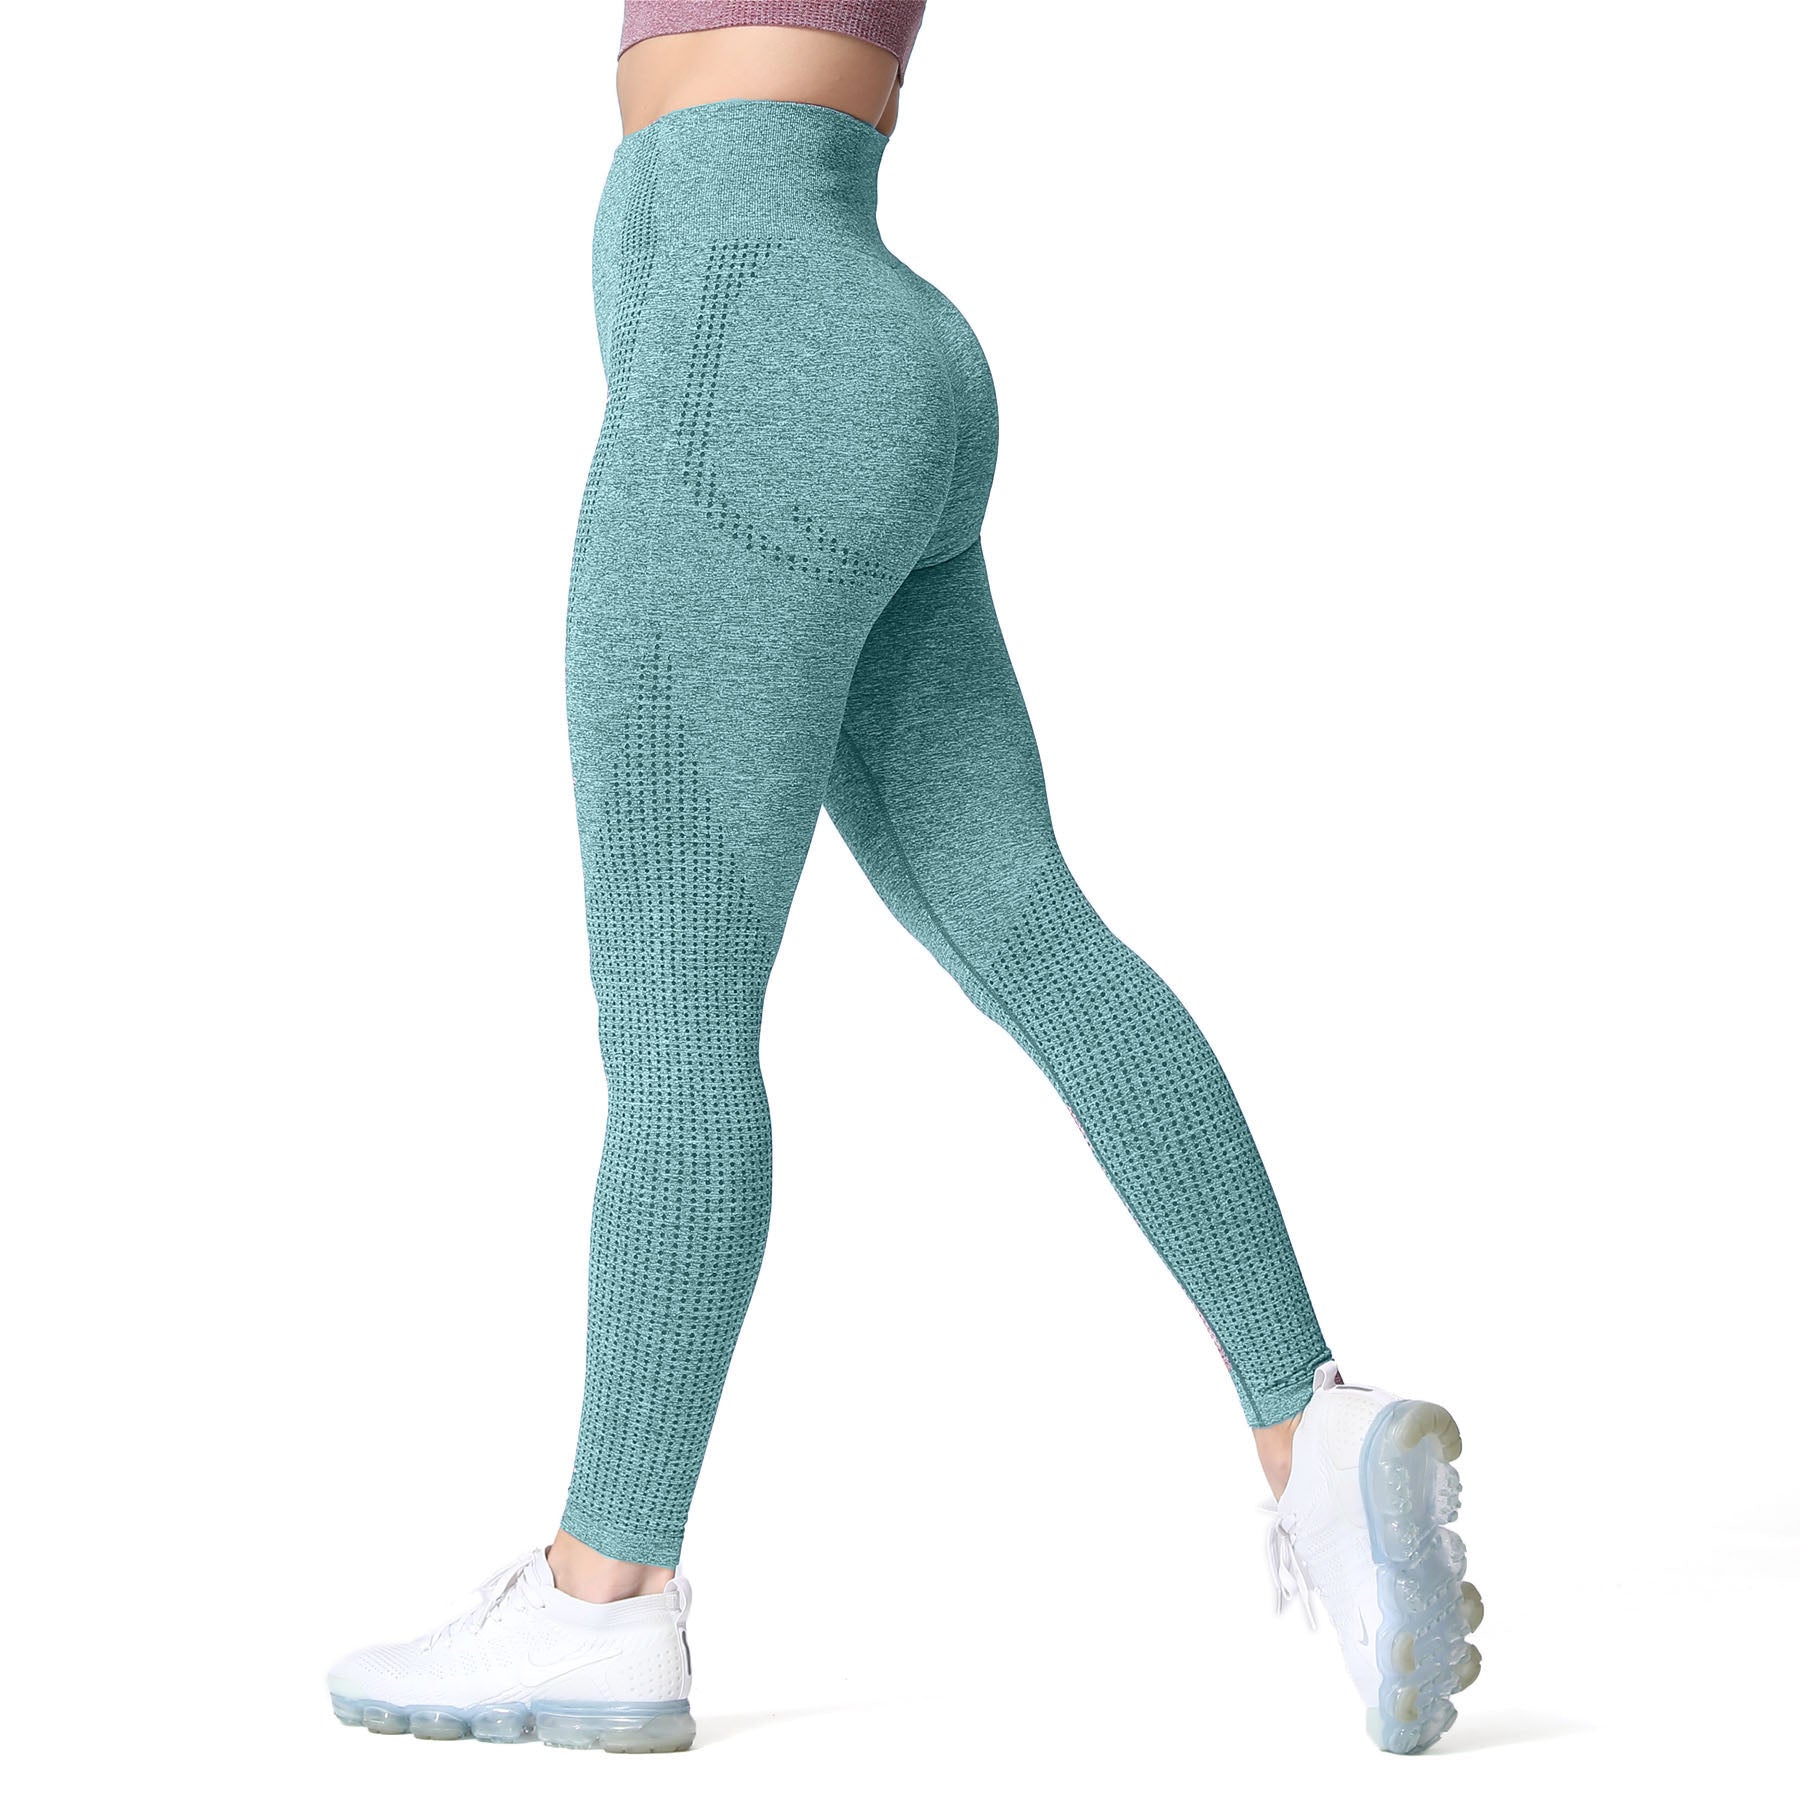 EHQJNJ Compression Seamless Leggings Lifting Fitness Jogger Activewear  Breathable High Waist Yoga Pants 